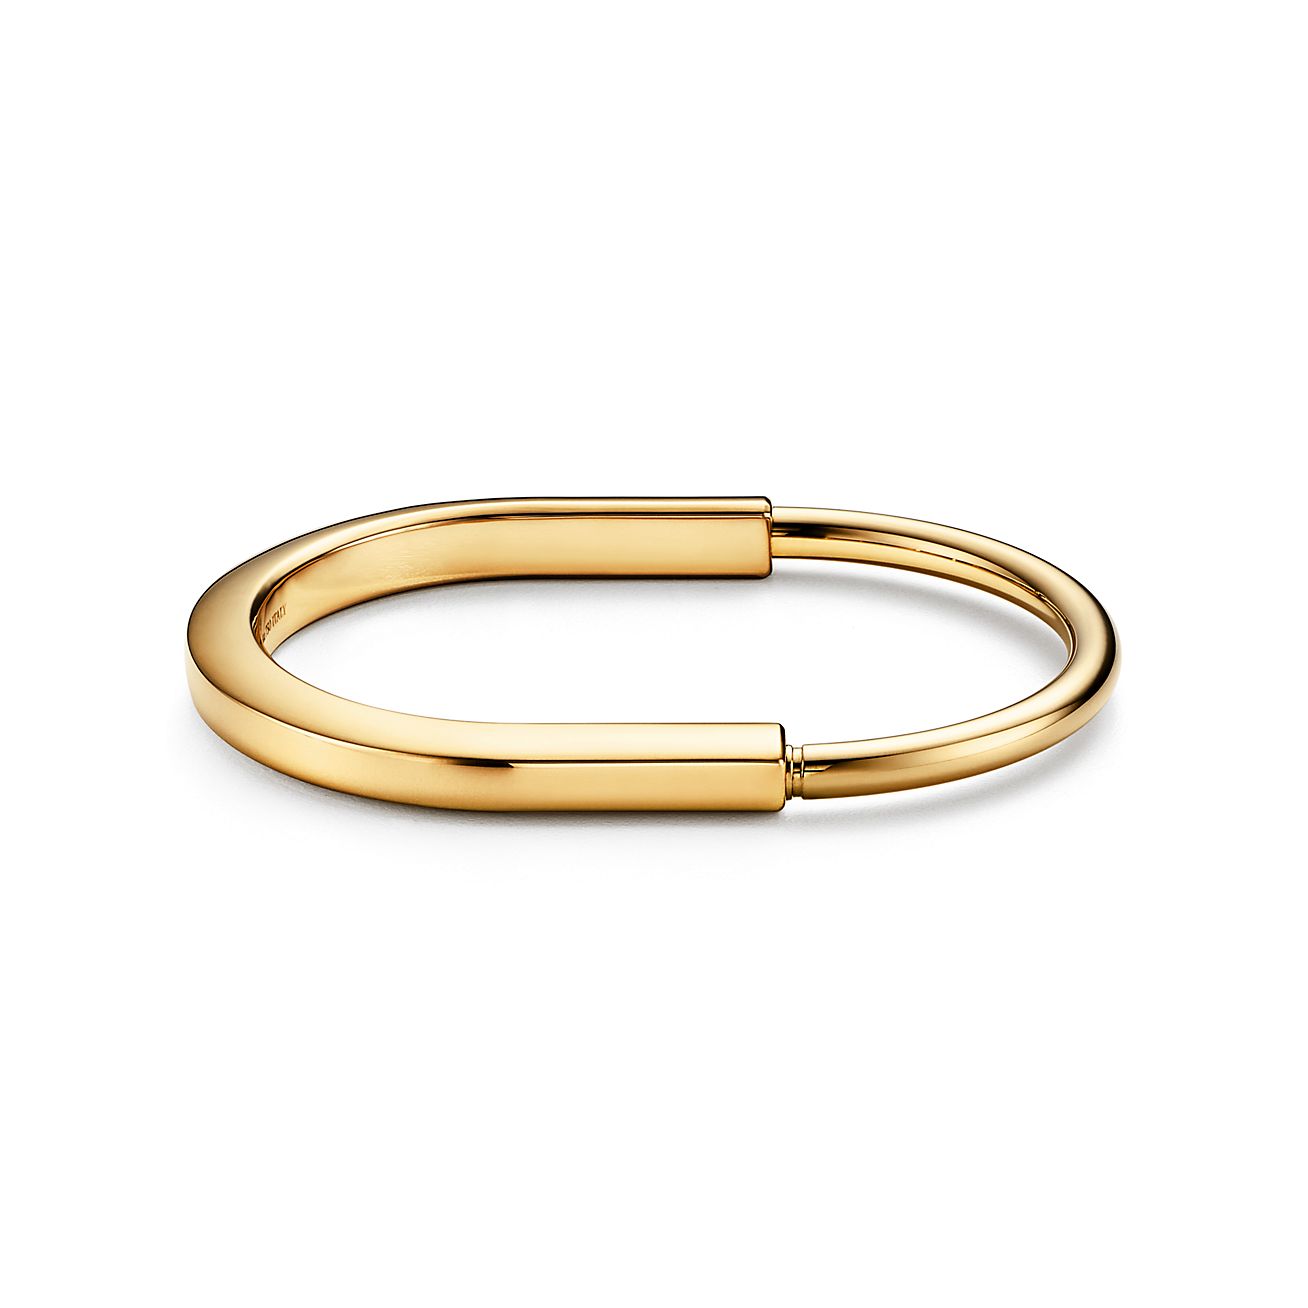 18 kt yellow gold charm bracelet with heart lock key